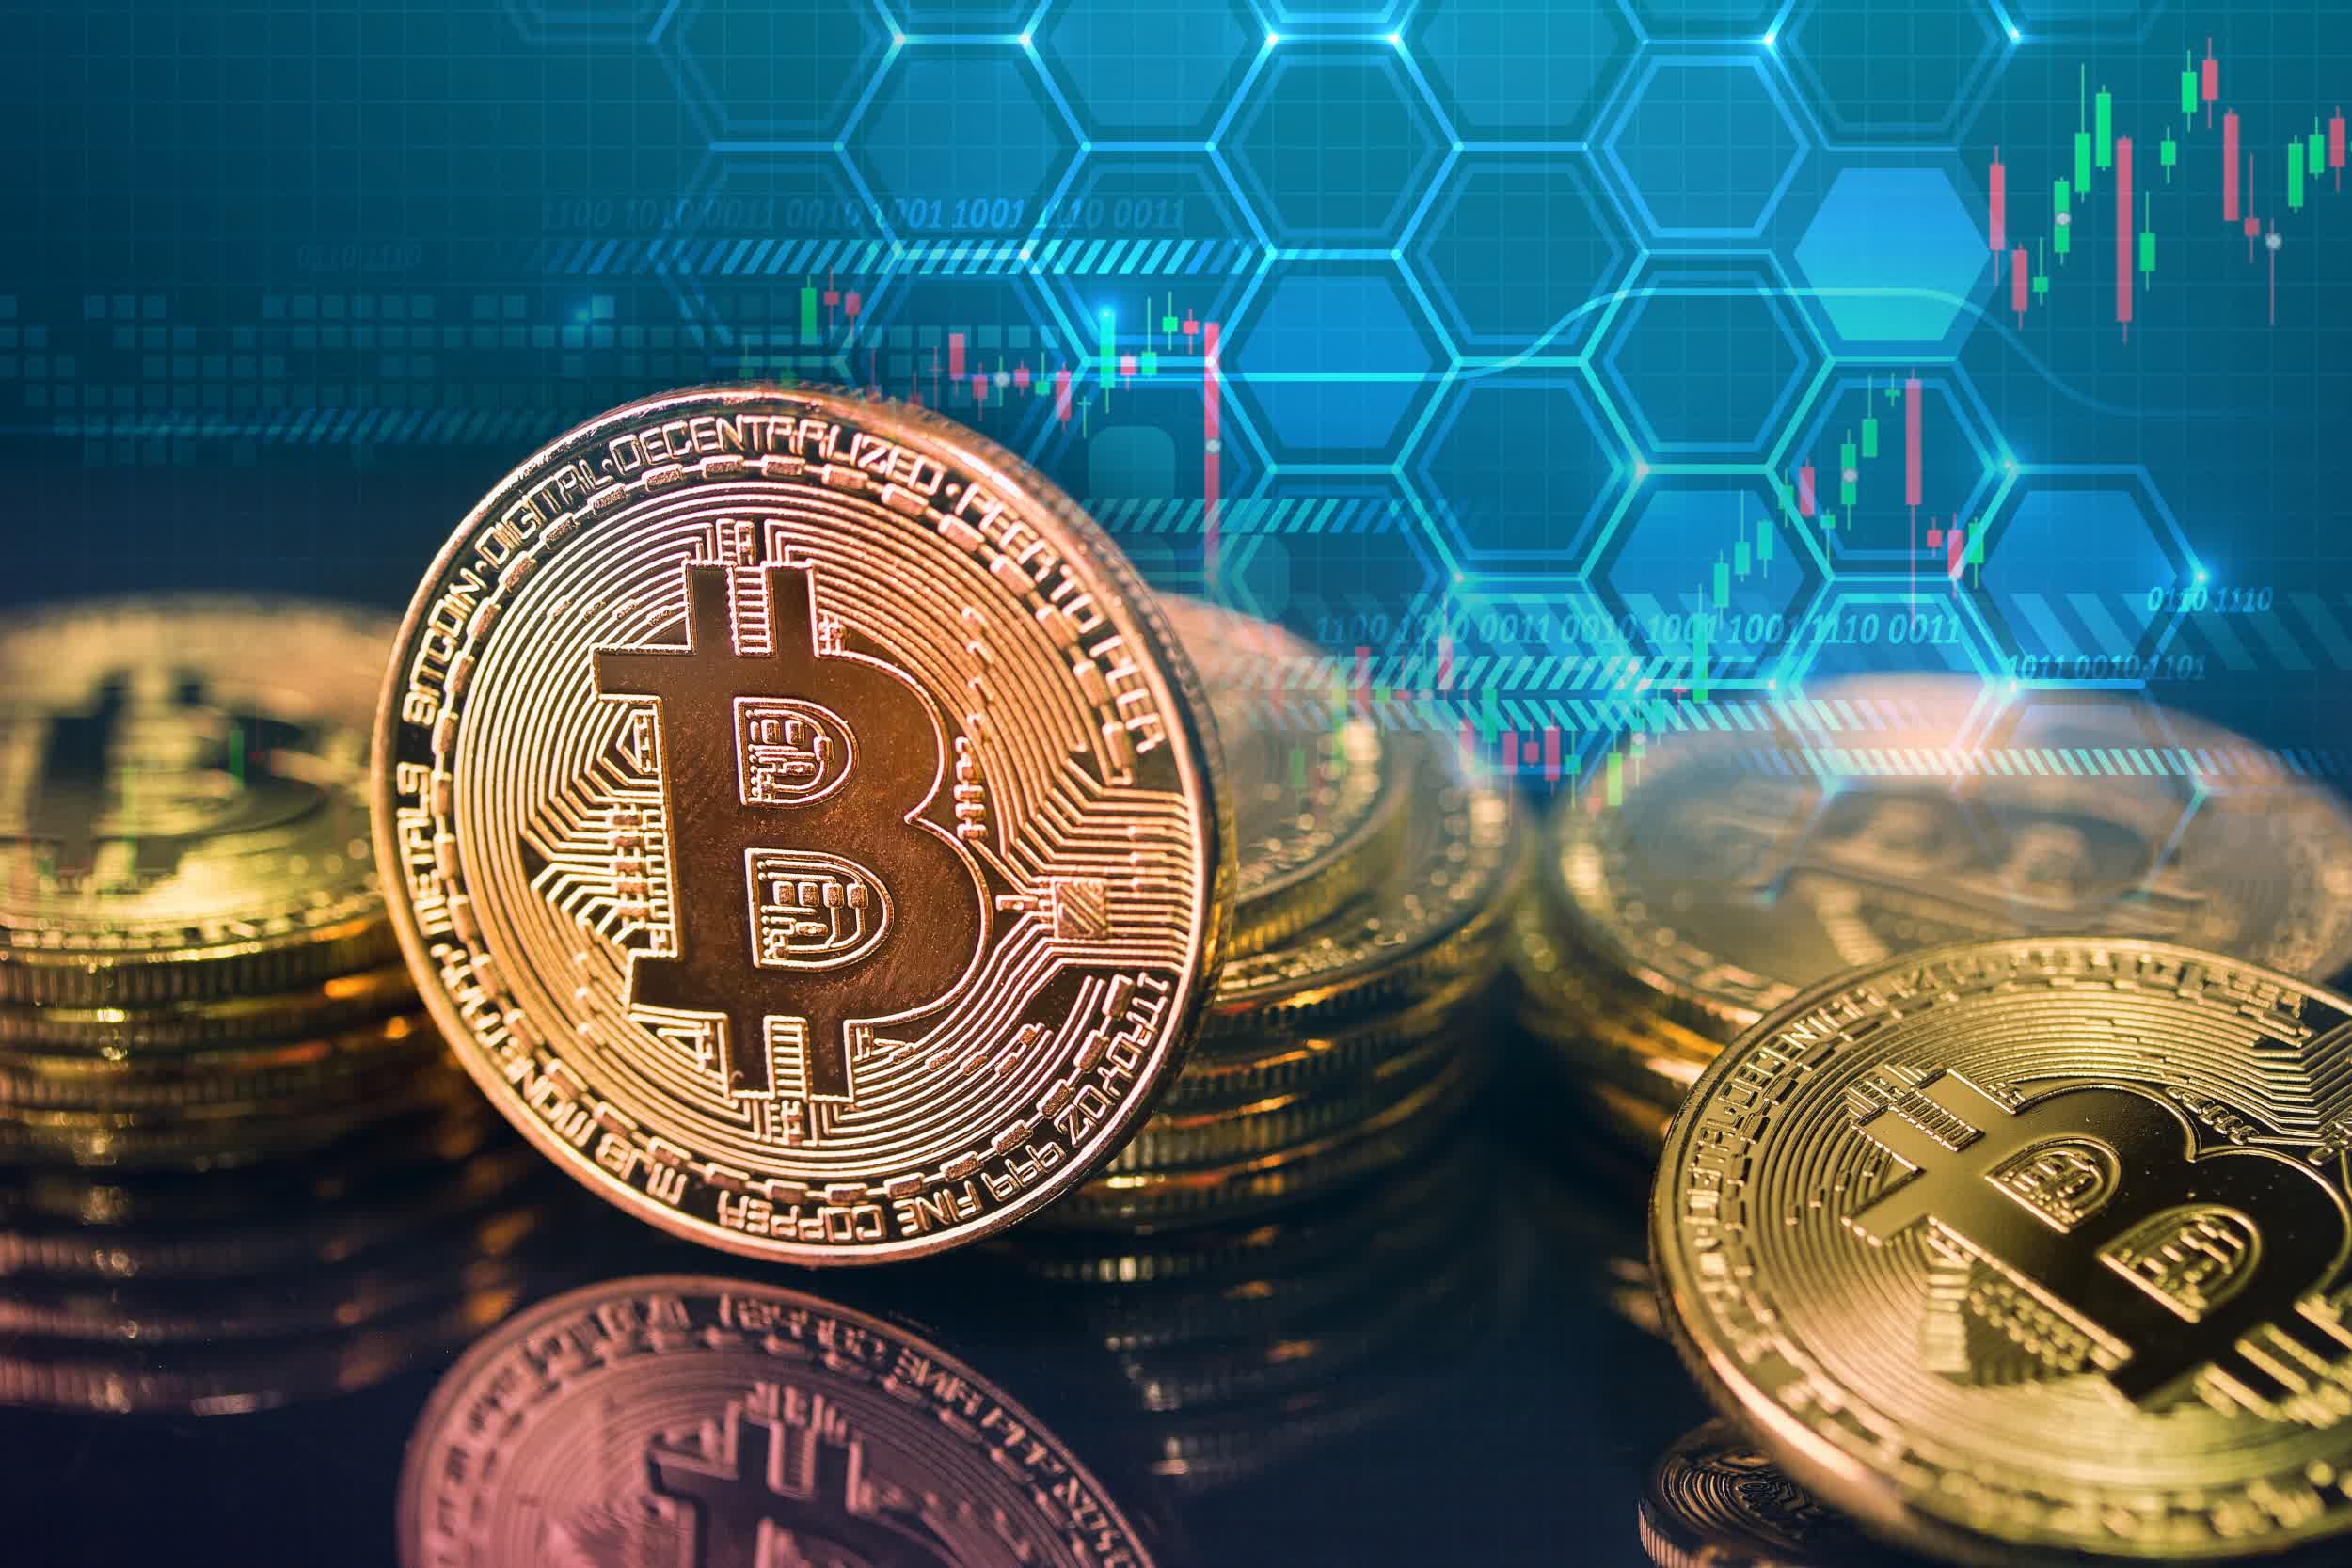 Square invests $50 million in Bitcoin